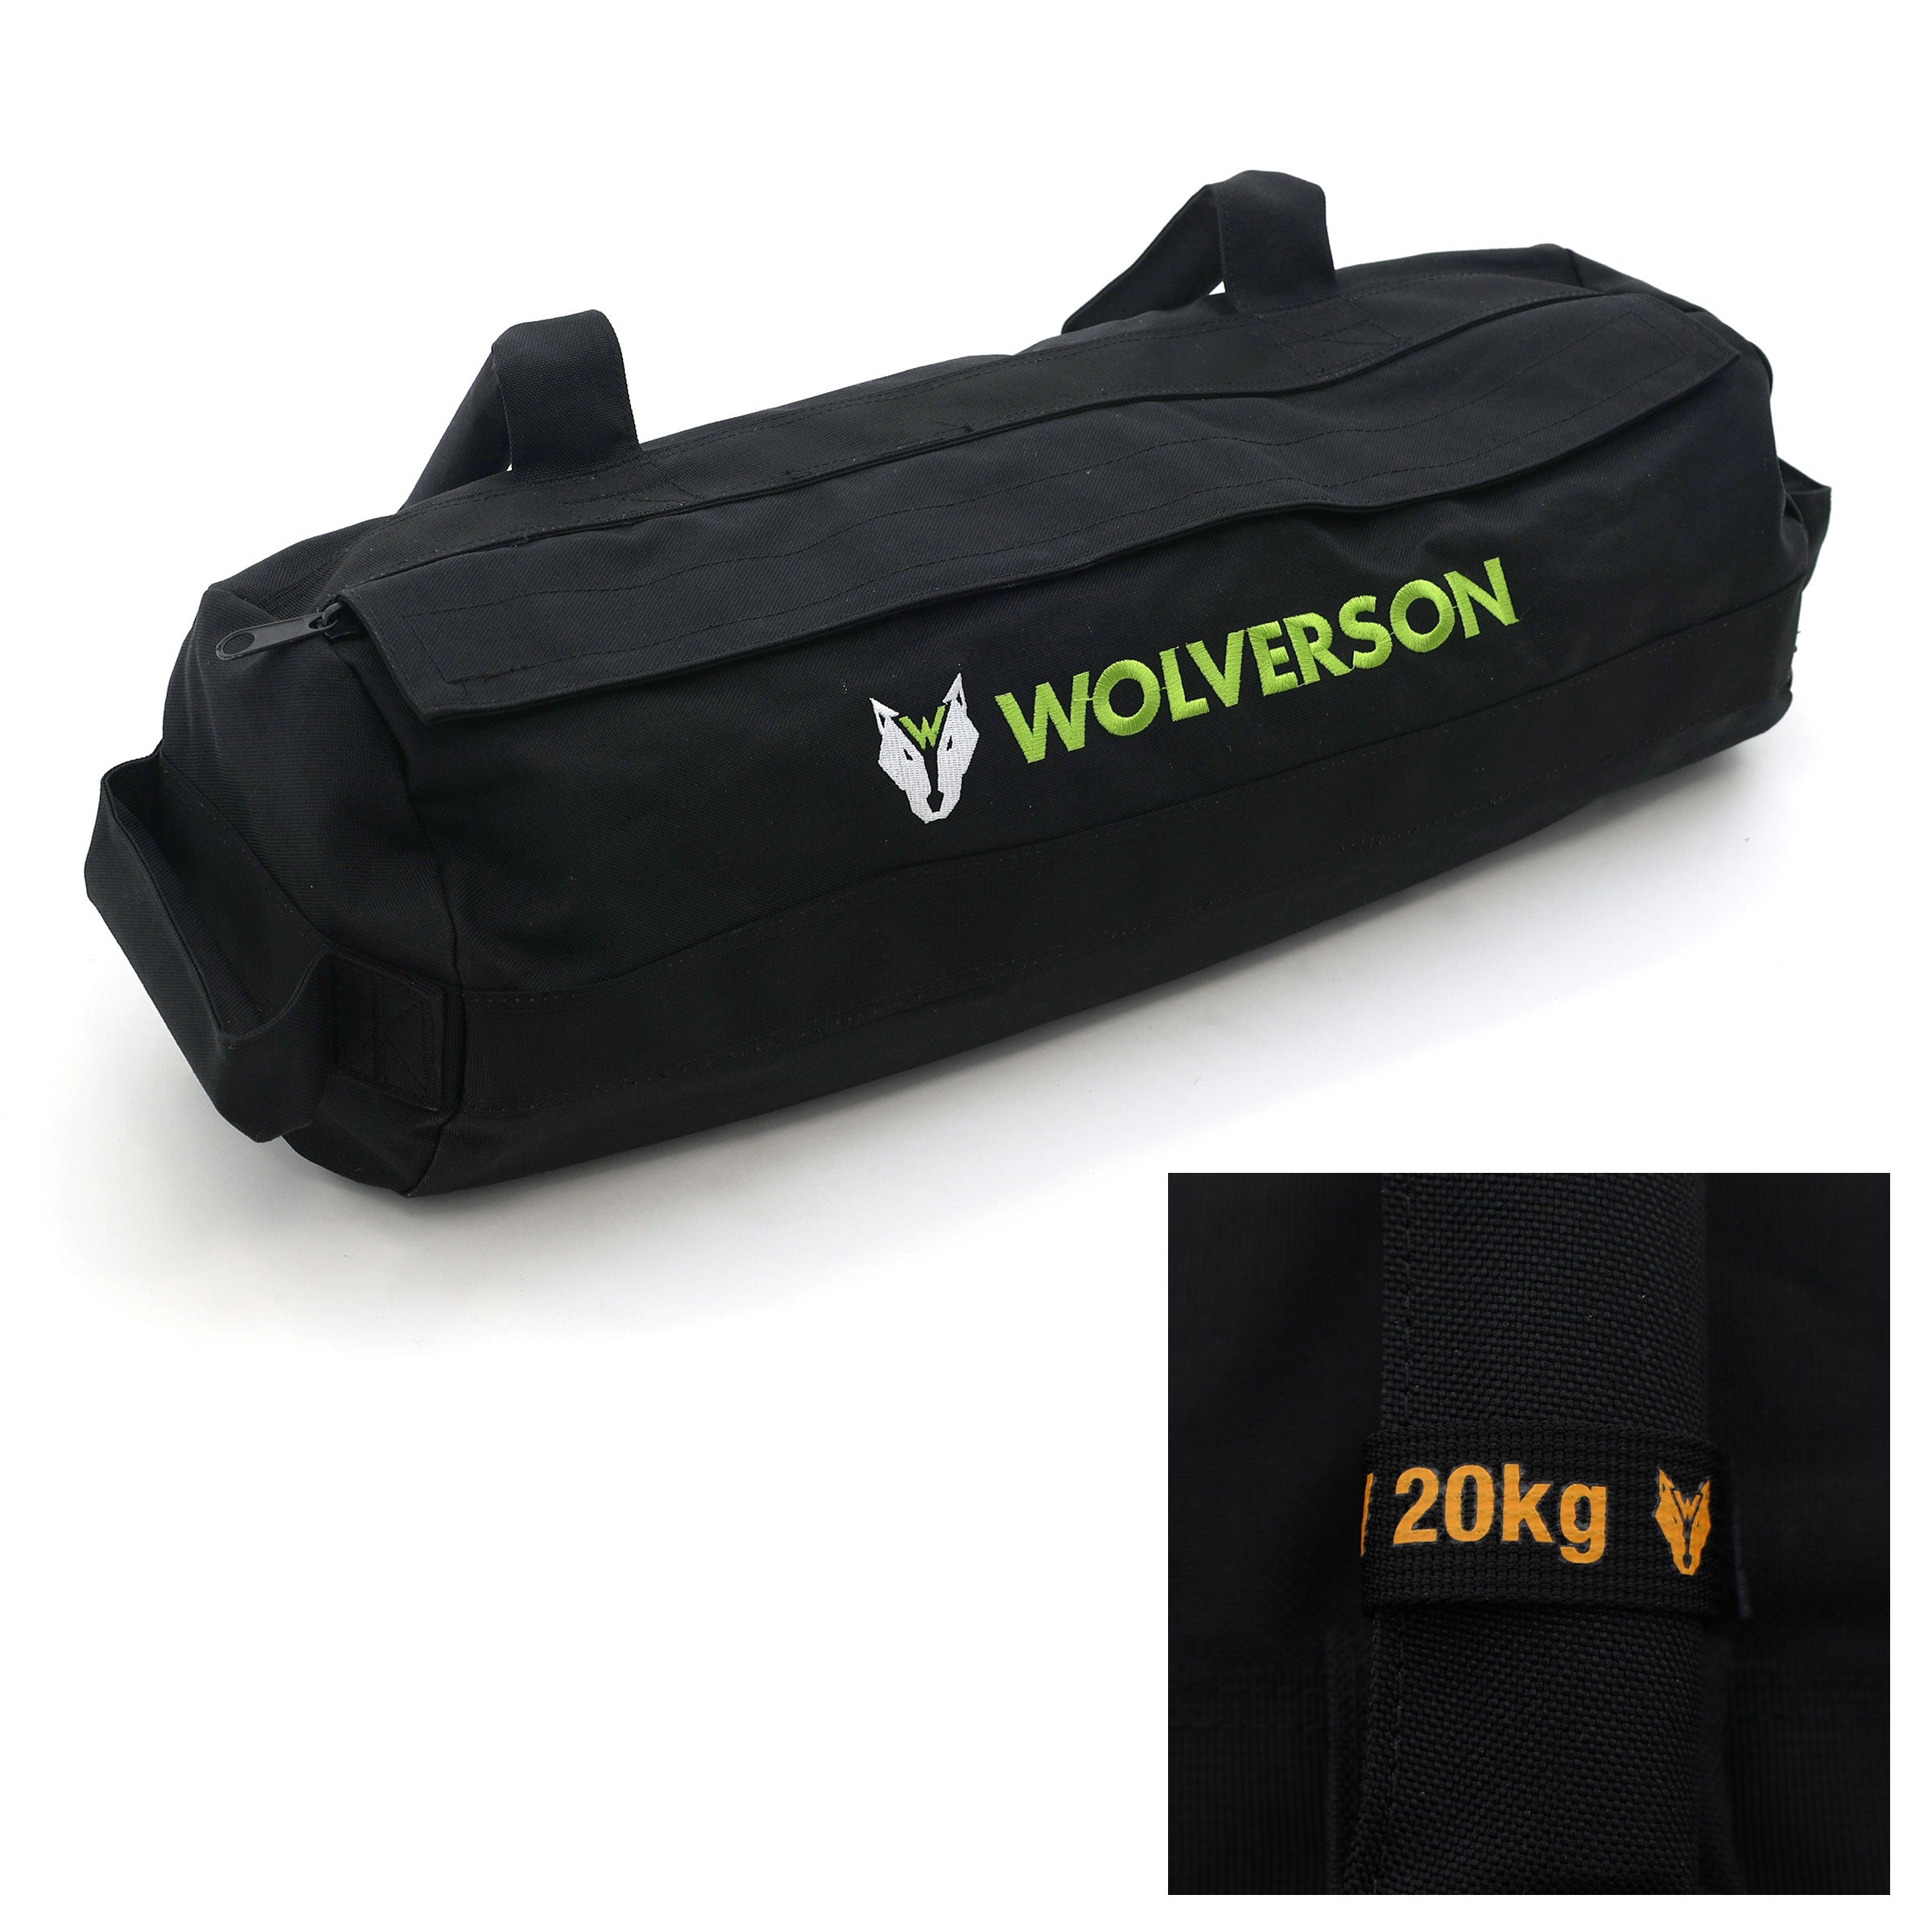 Wolverson HYROX Sandbags